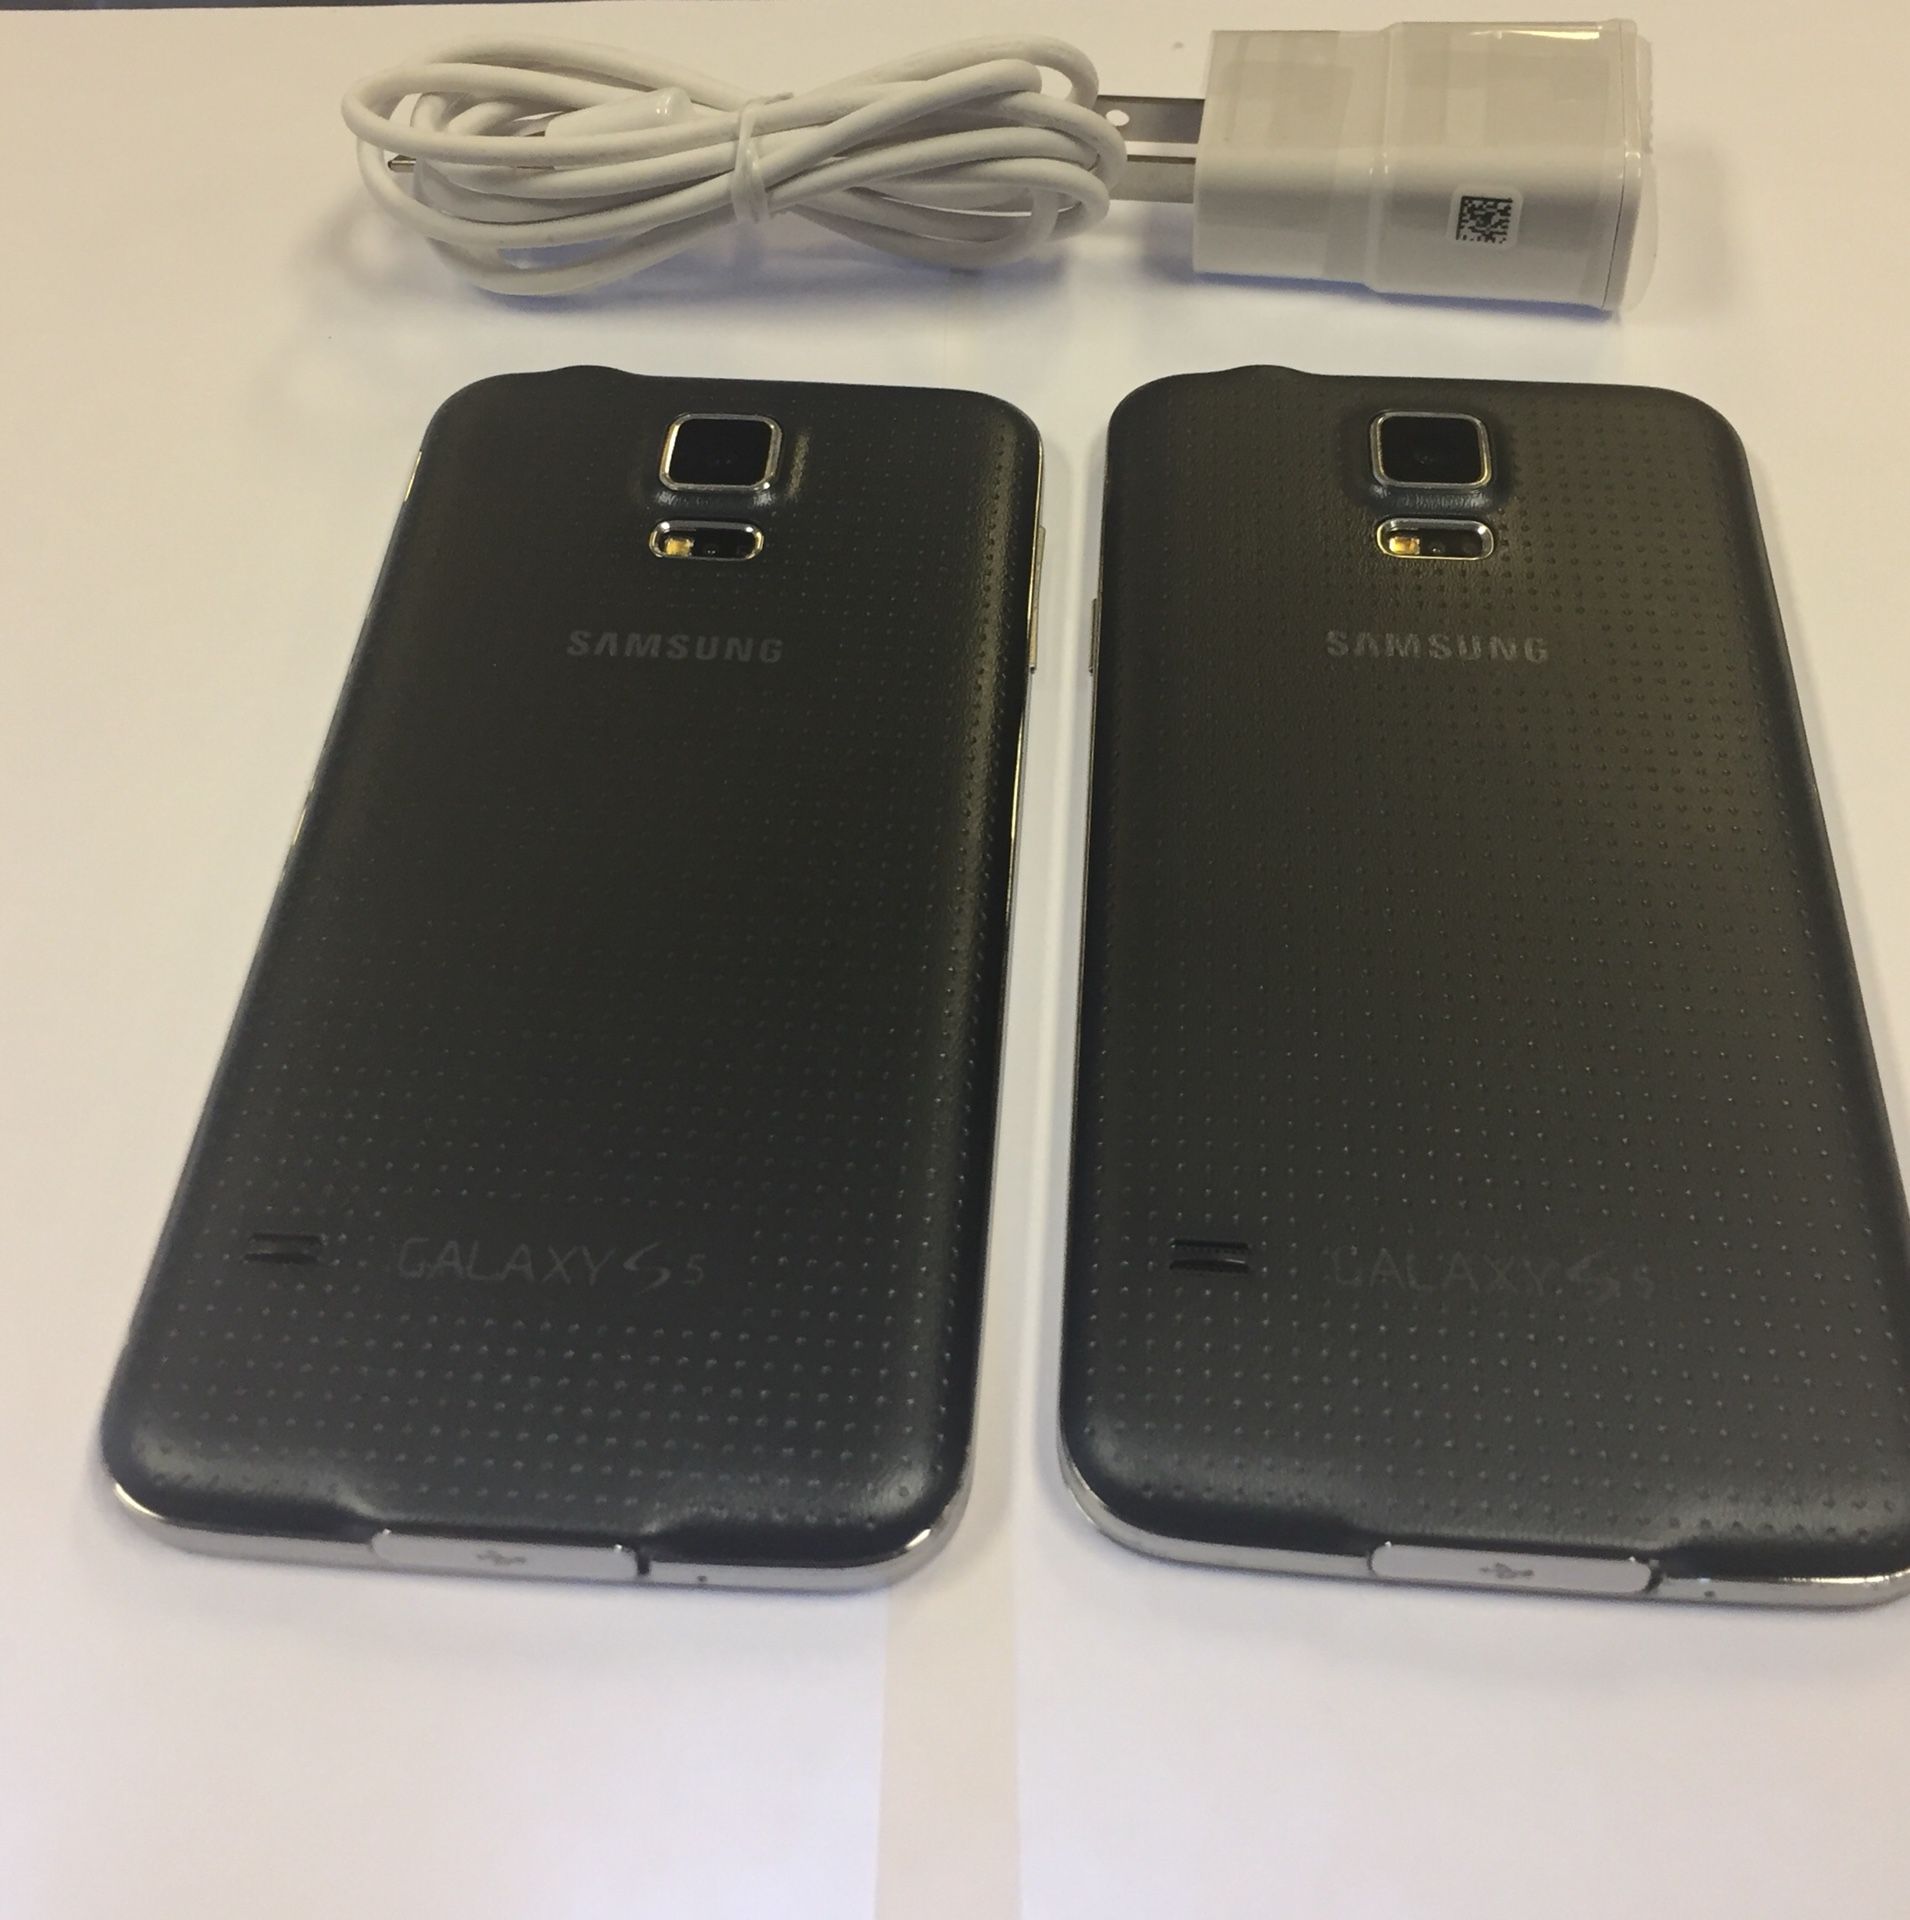 Samsung Galaxy S5 Unlocked Excellent Condition $129 Each